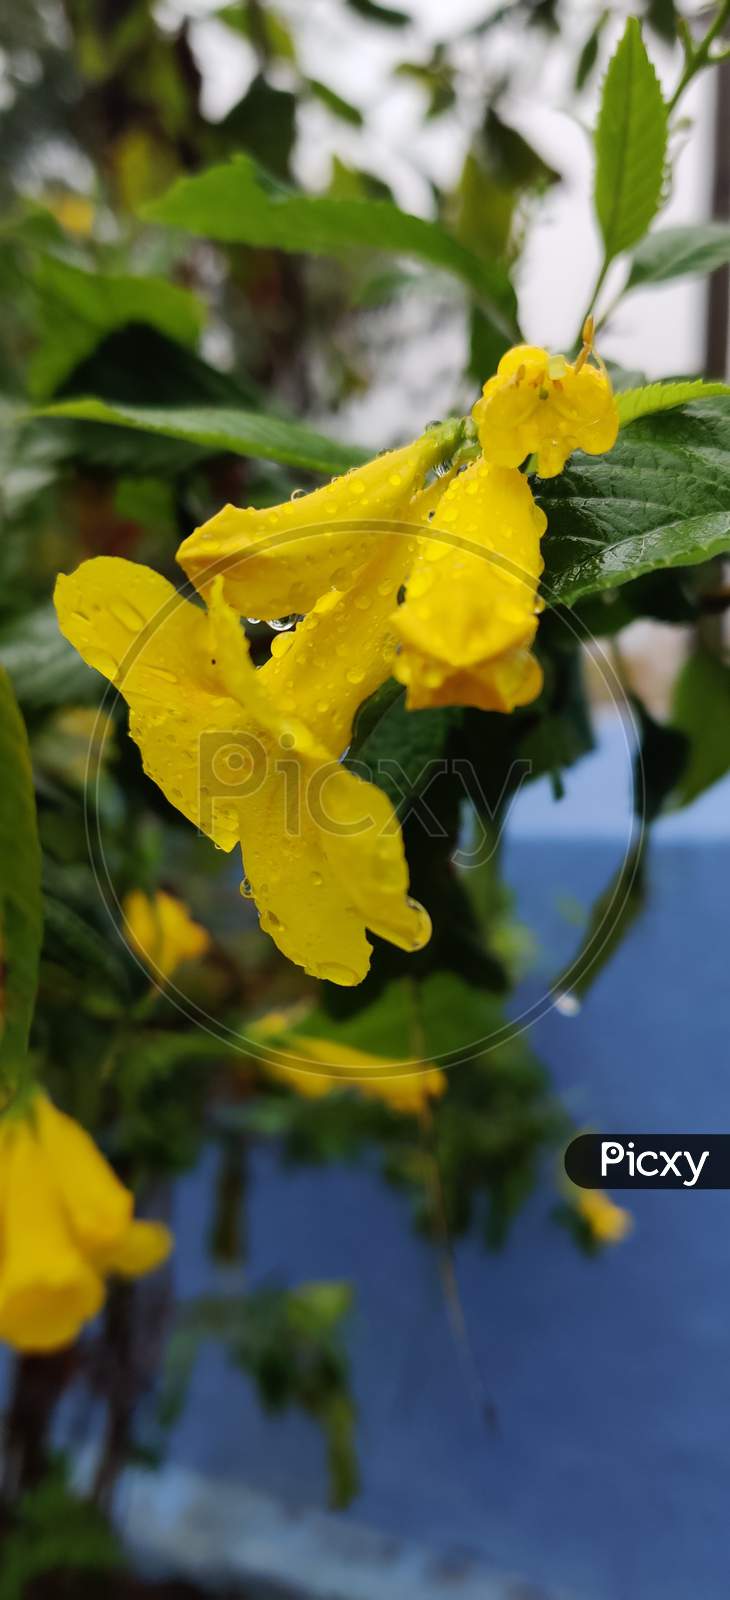 Dew Drops on Yellow Flower